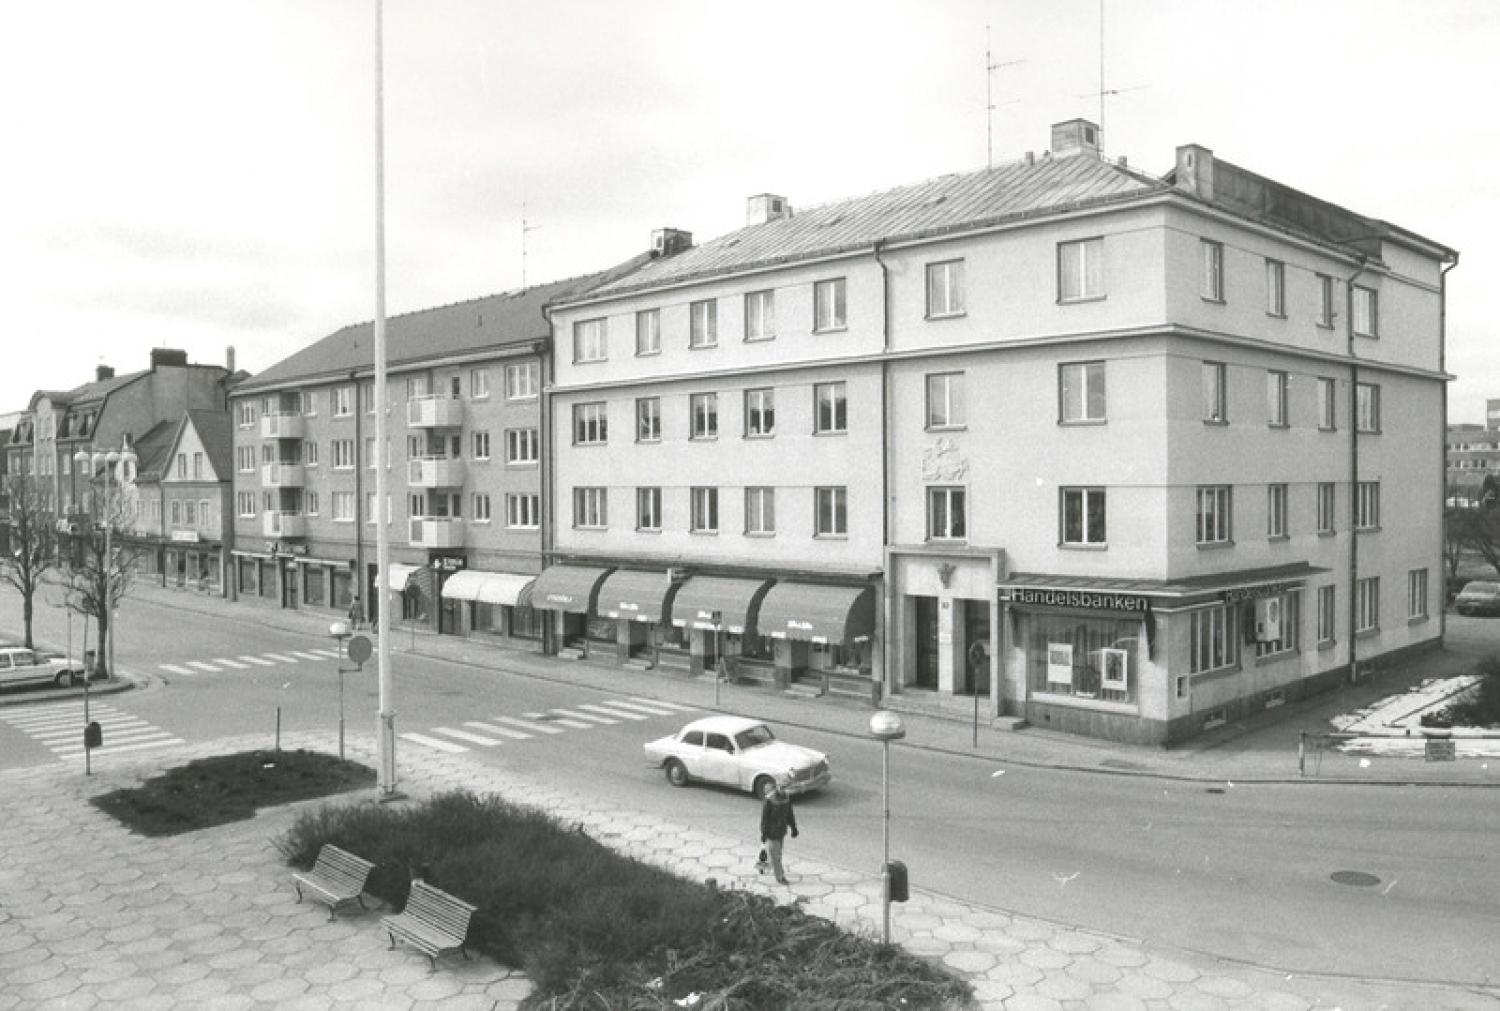 Ett svartvitt foto av en byggnad i en stad.